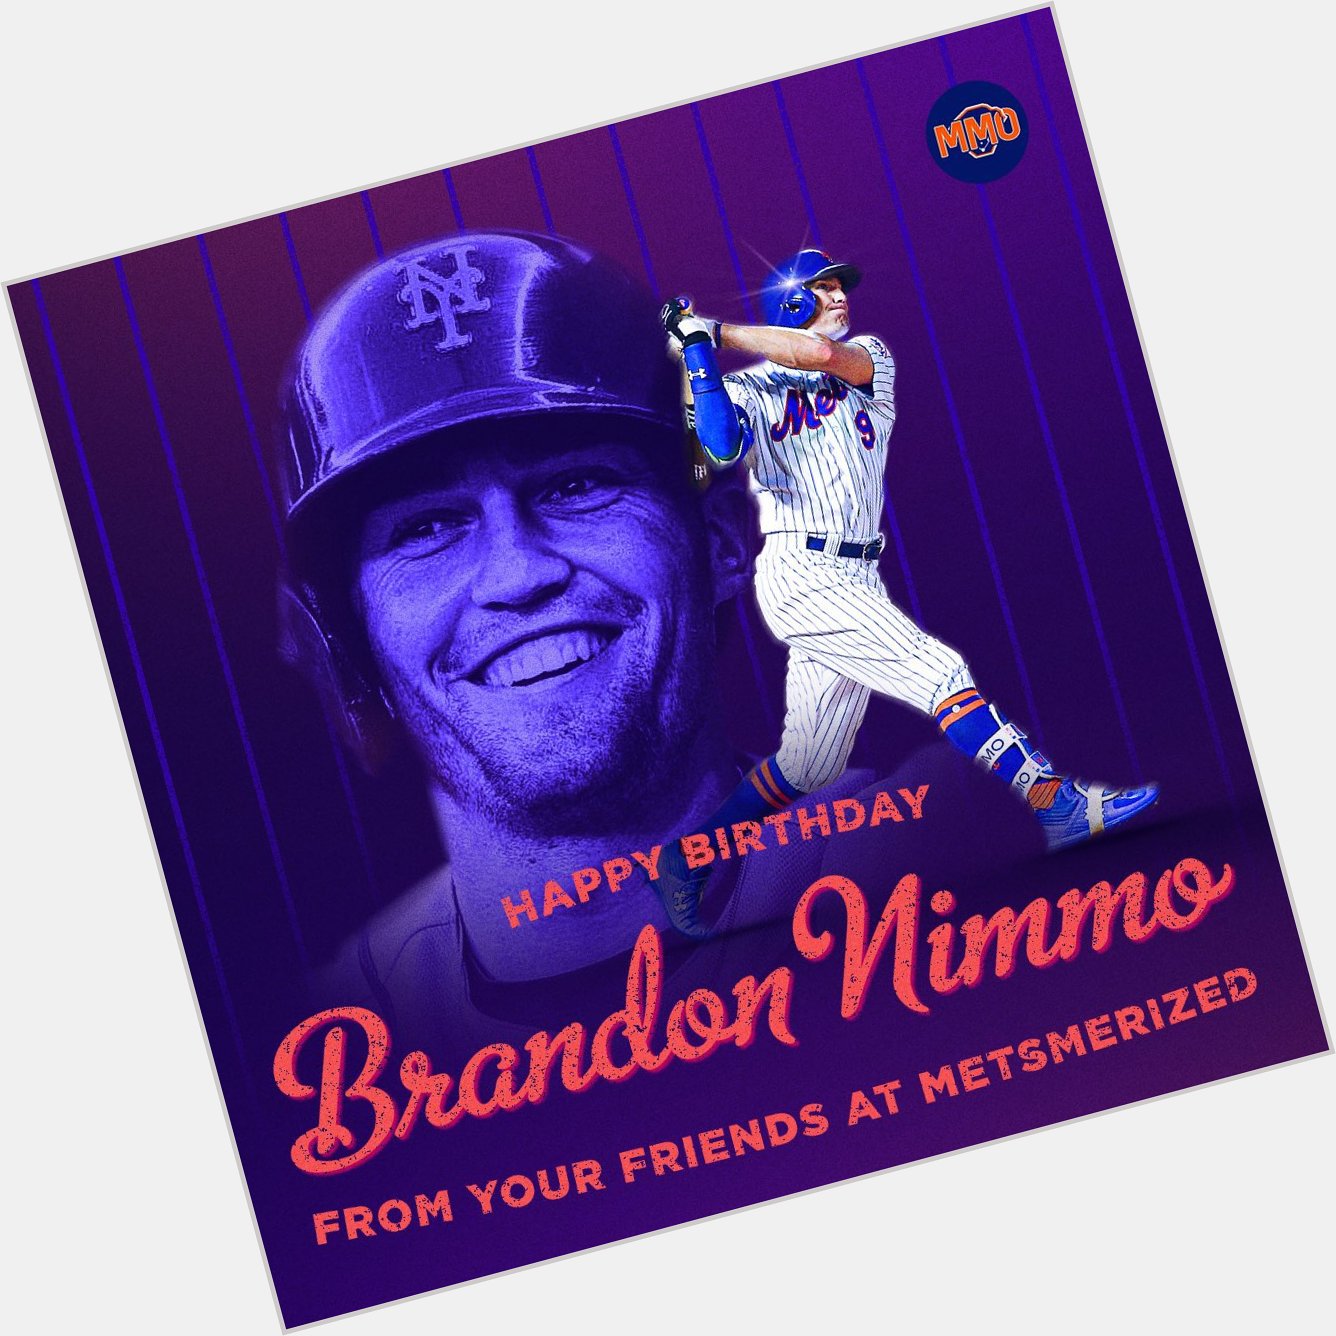 Happy Birthday Brandon Nimmo! 